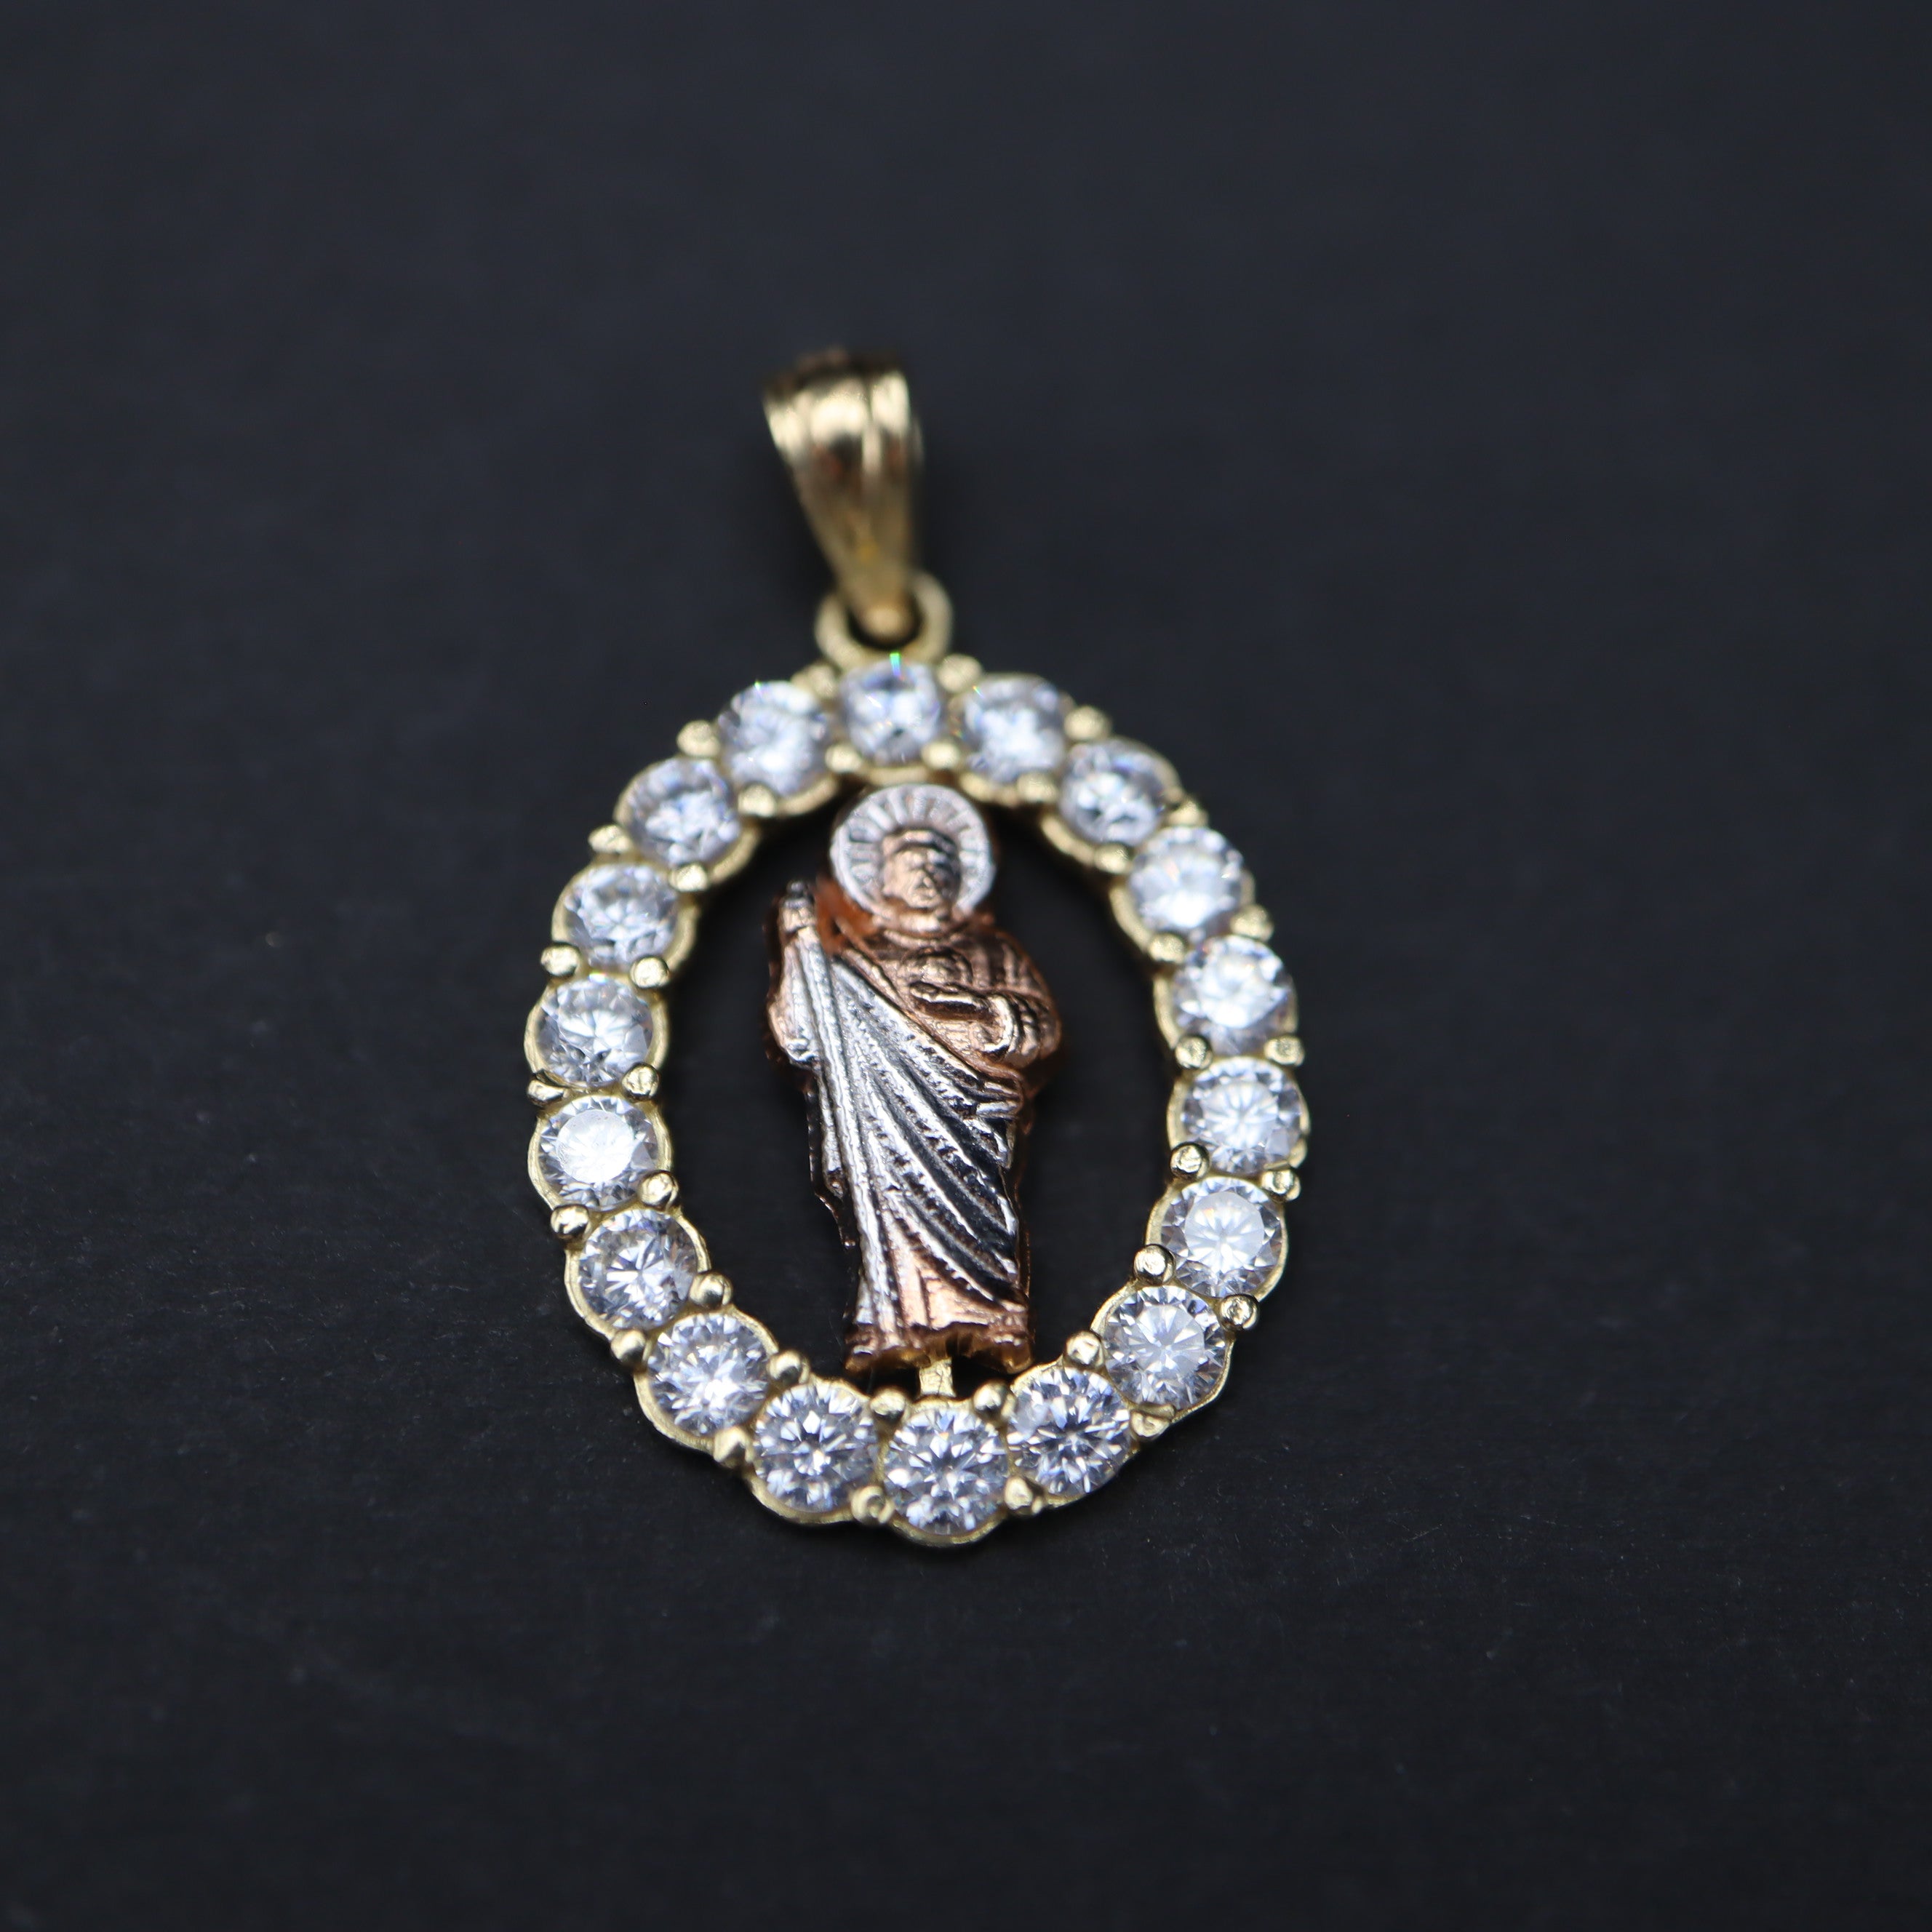 18k Gold filled Saint Jude Necklace San Judas Tadeo necklace religious  jewelry | eBay